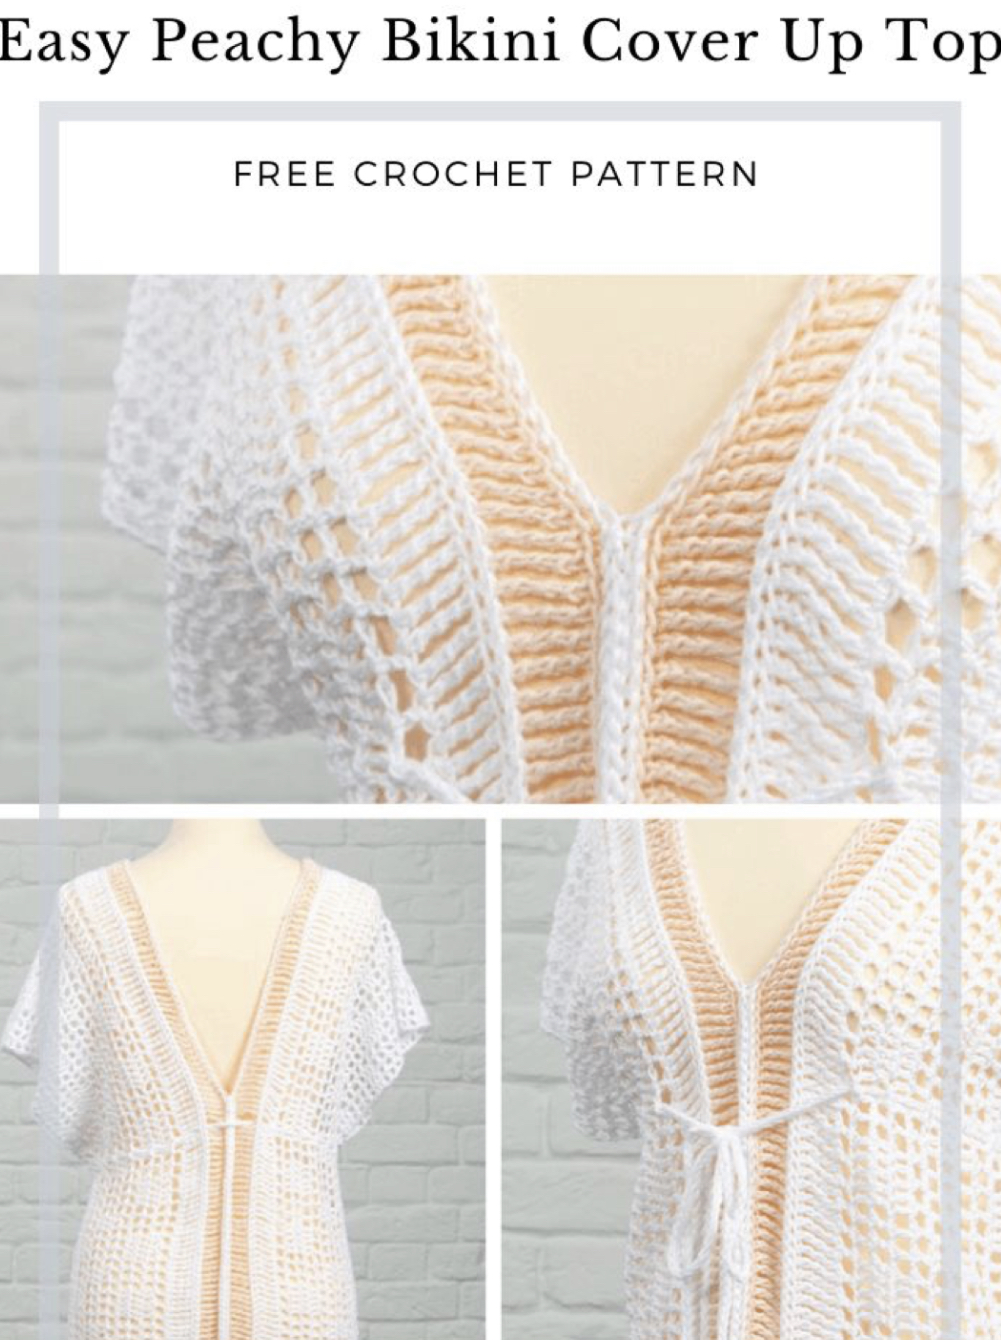 Easy Peachy Bikini Cover Up Crochet Pattern (FREE) – FREE CROCHET ...